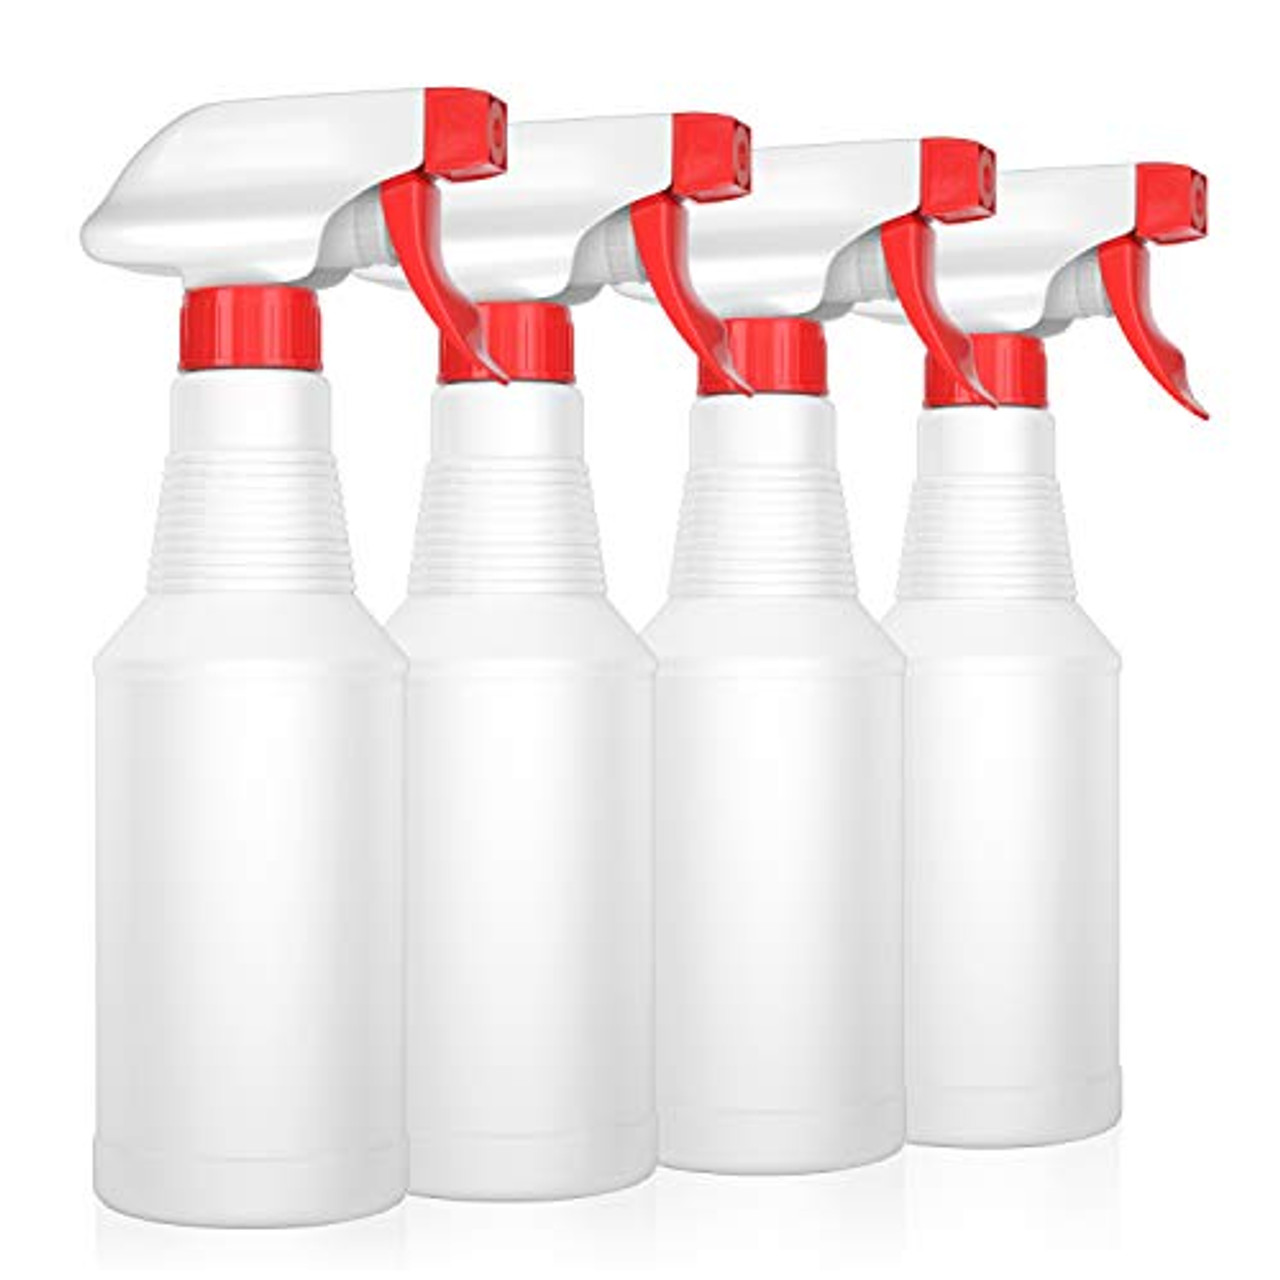 5 Clear Plastic 2 OZ PET Empty Spray Bottles Refill Mist Pump